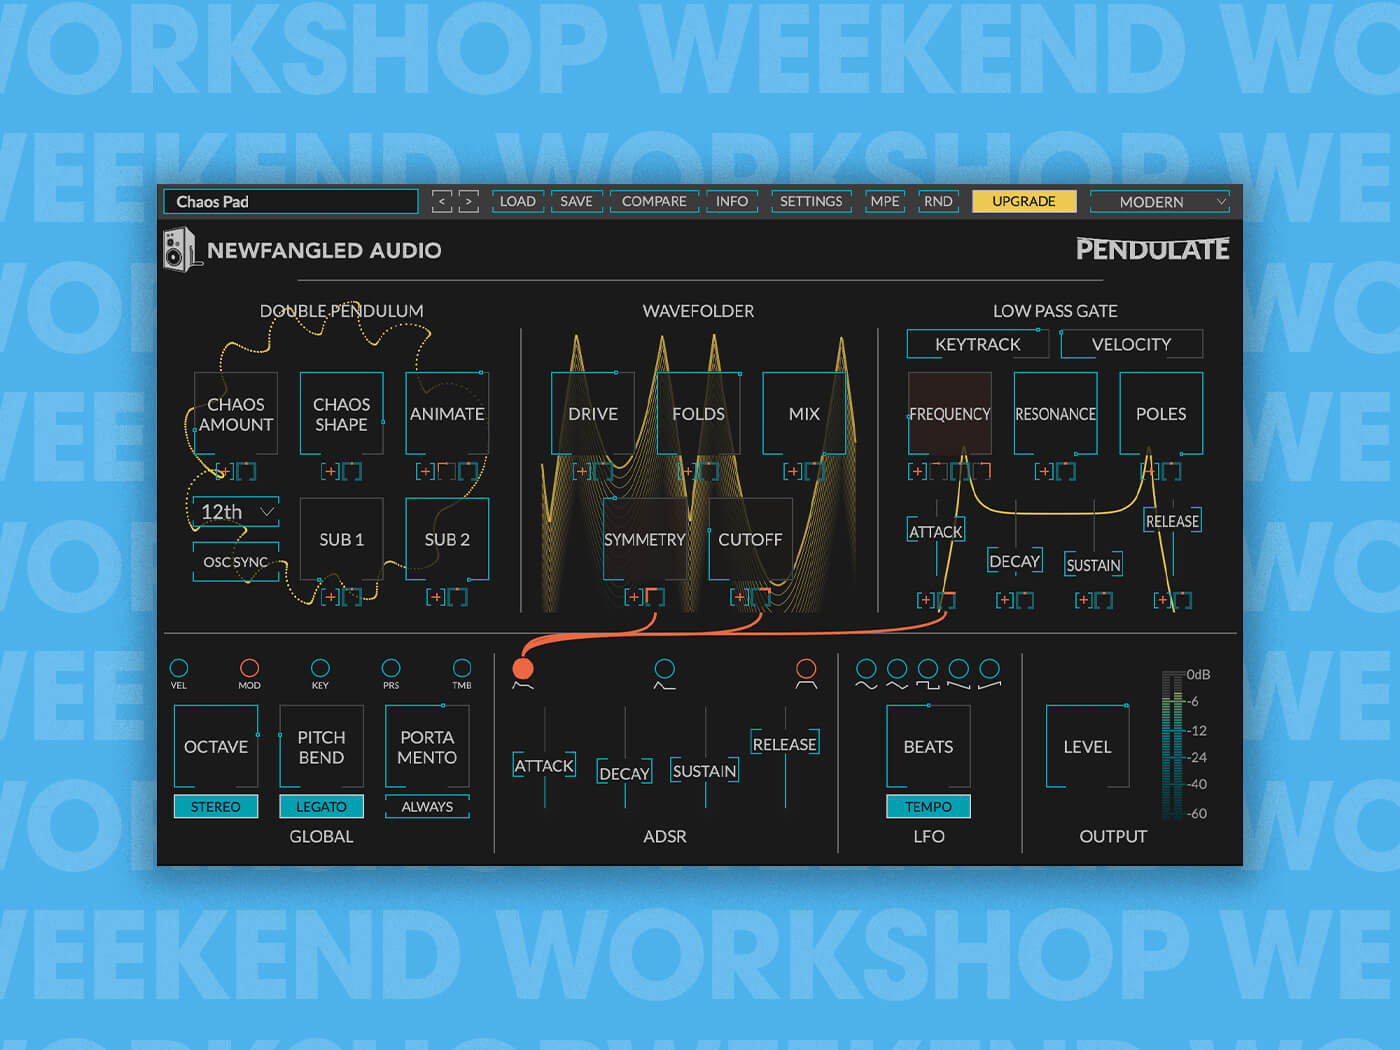 Weekend Workshop: Make synthwave with Pendulate Image HERO